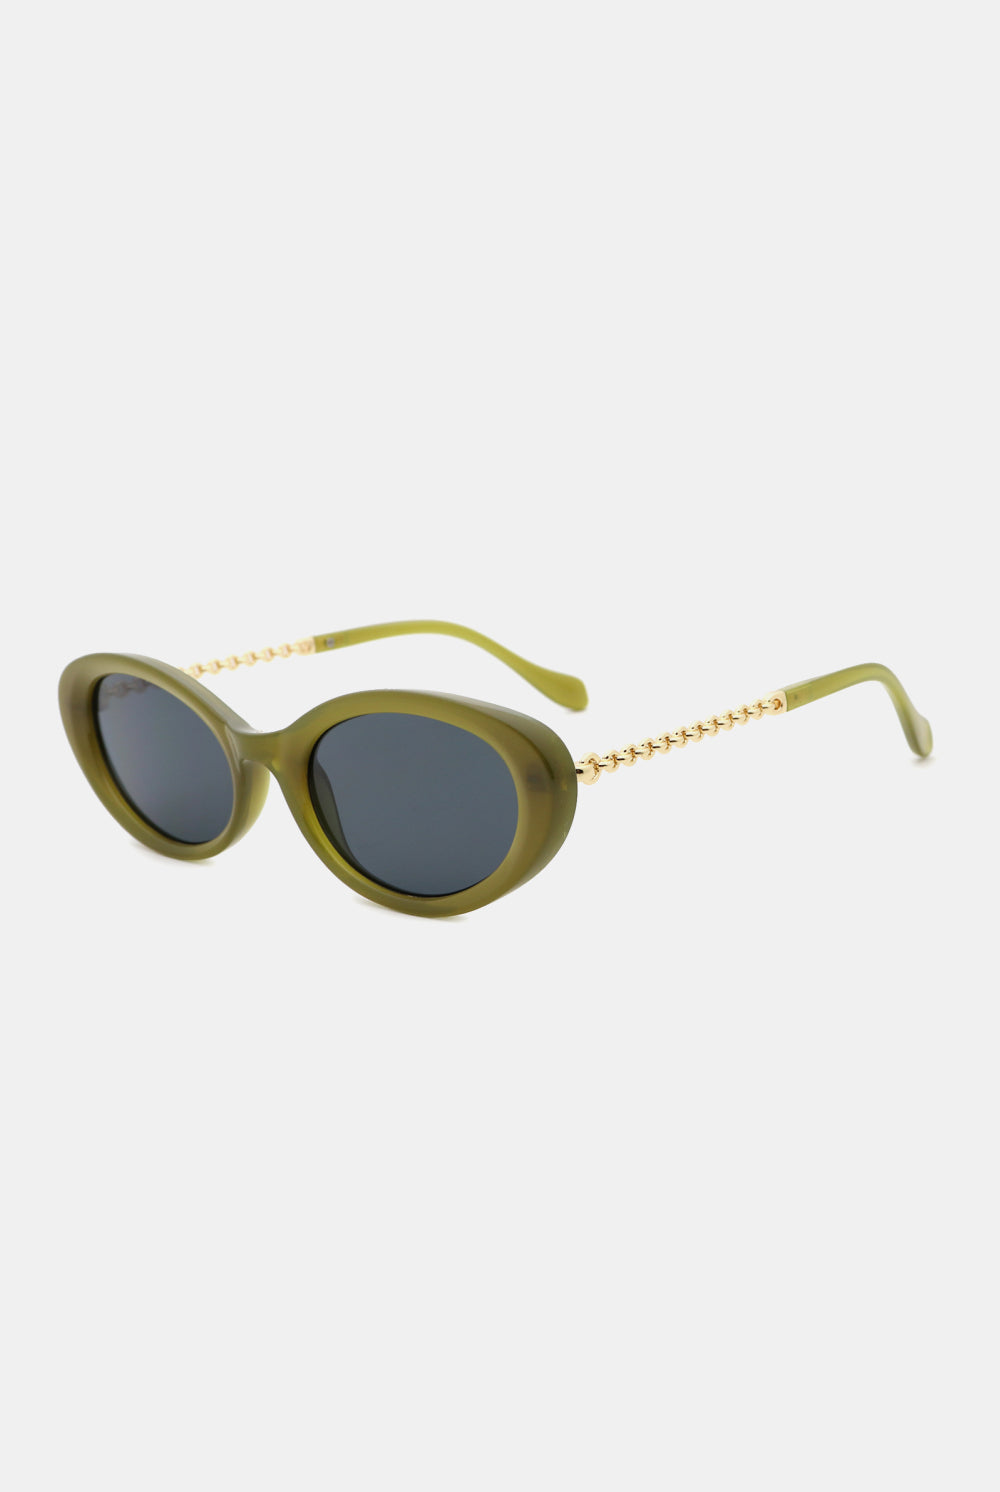 Polycarbonate Frame Cat-Eye Sunglasses - GemThreads Boutique Polycarbonate Frame Cat-Eye Sunglasses